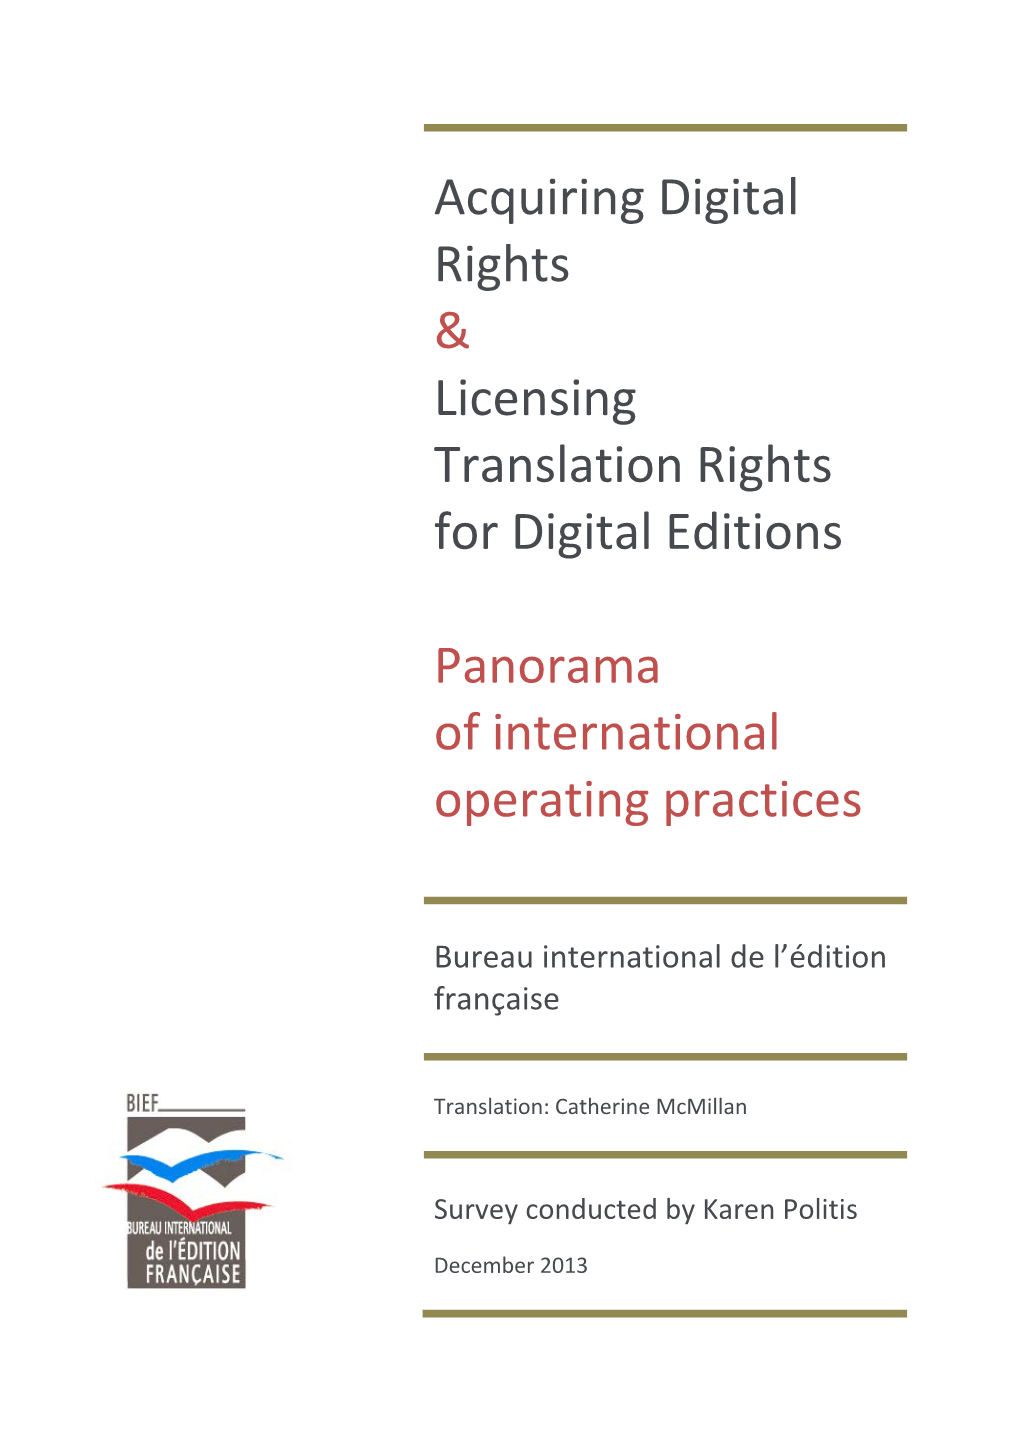 Acquiring Digital Rights & Licensing